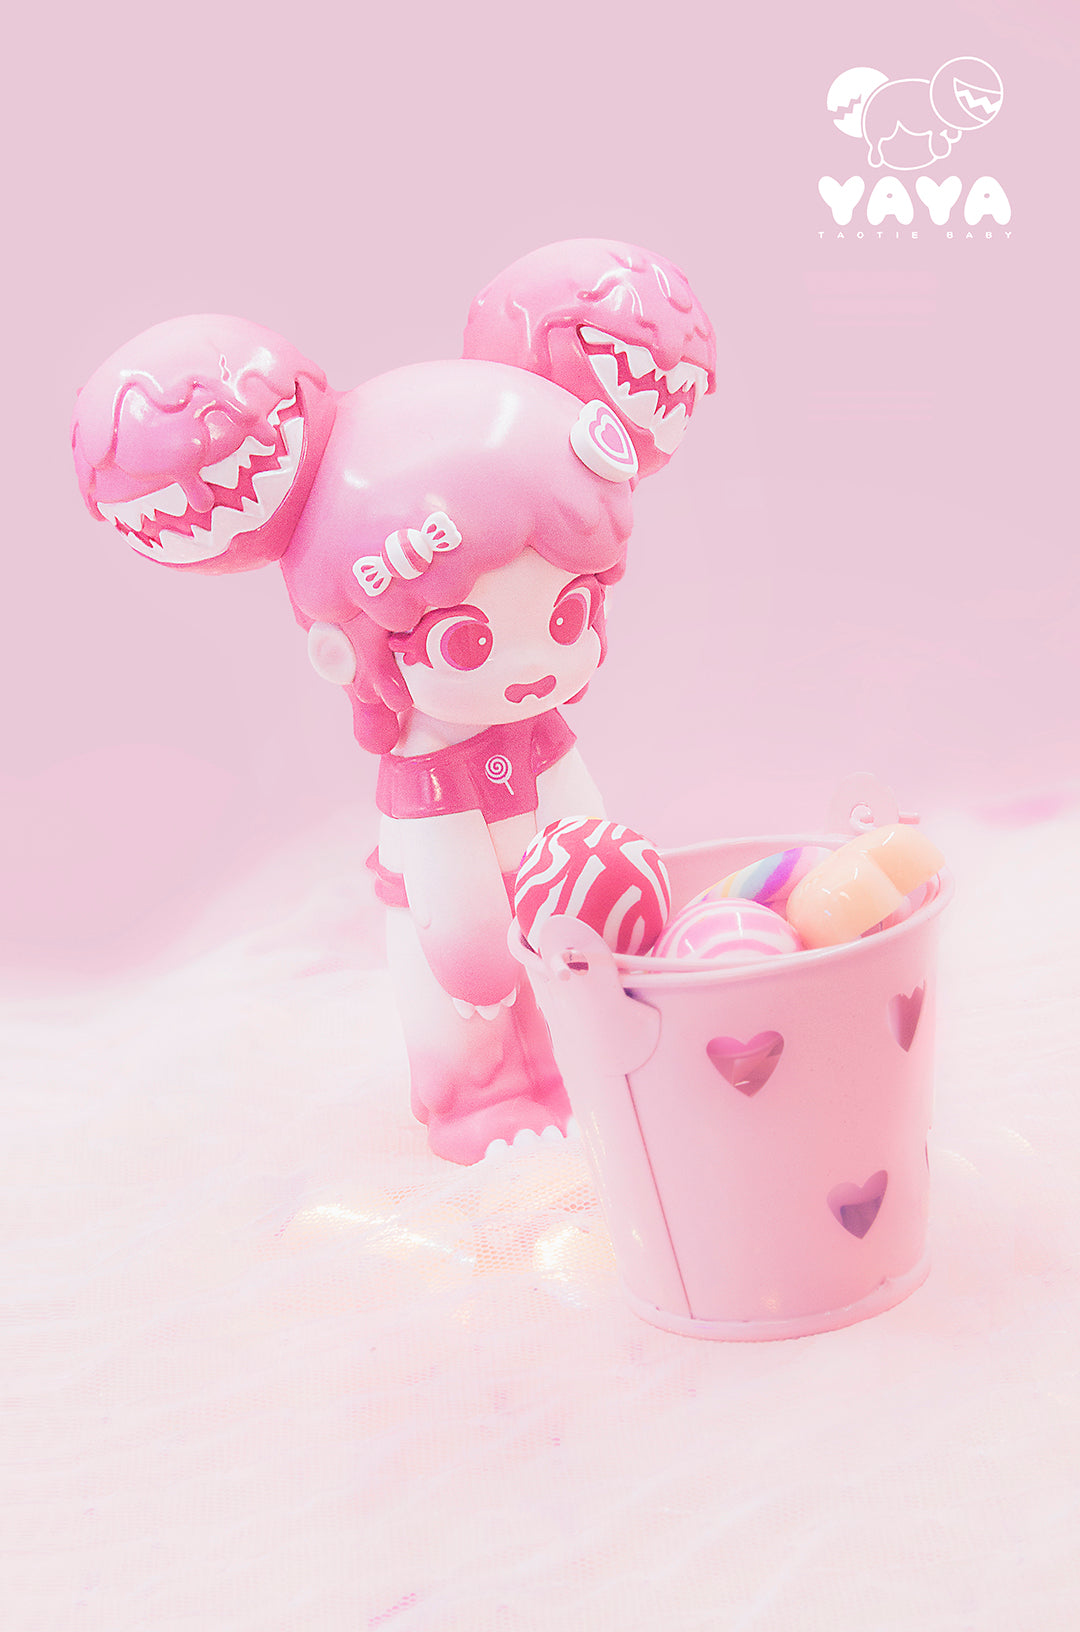 Yaya - Pink Love by MeDouble2020 x WeArtDoing